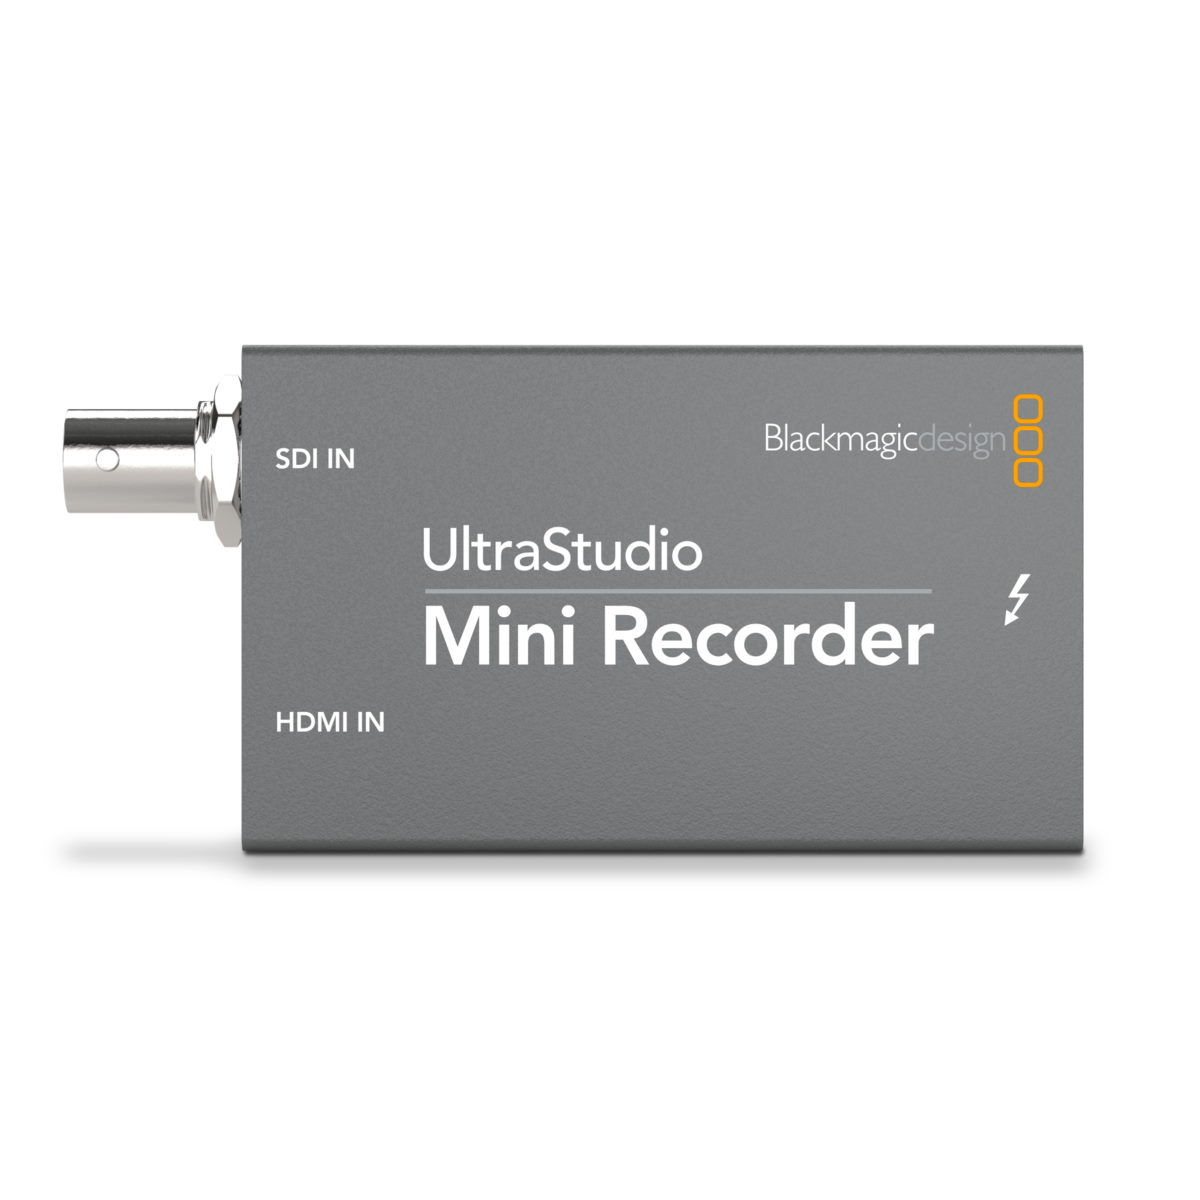 Blackmagic ultrastudio mini recorder software download mac free